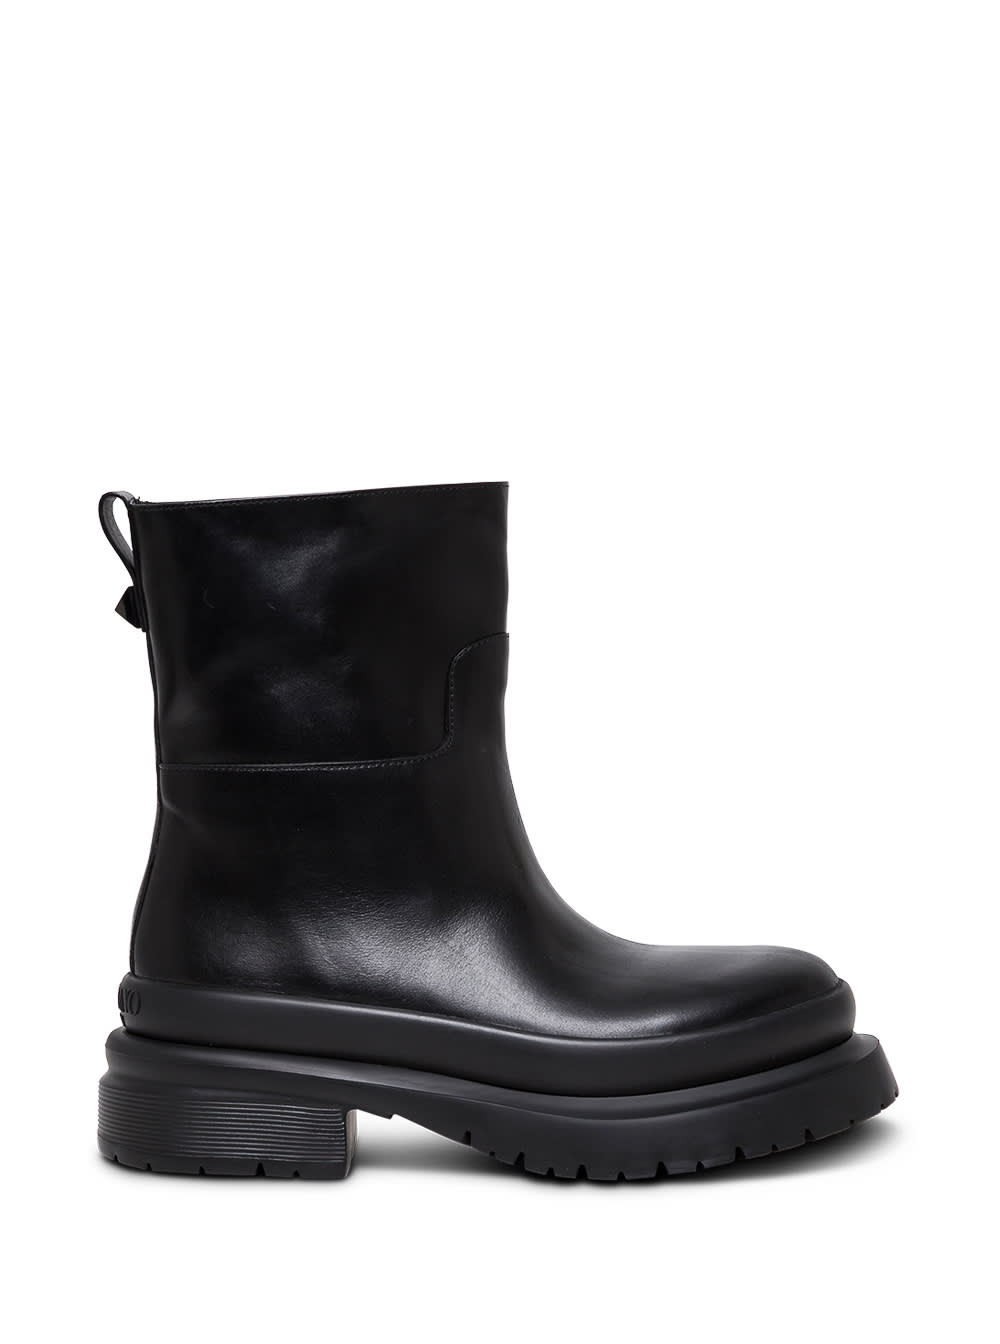 Valentino Garavani Roman Stud Black Leather Boots